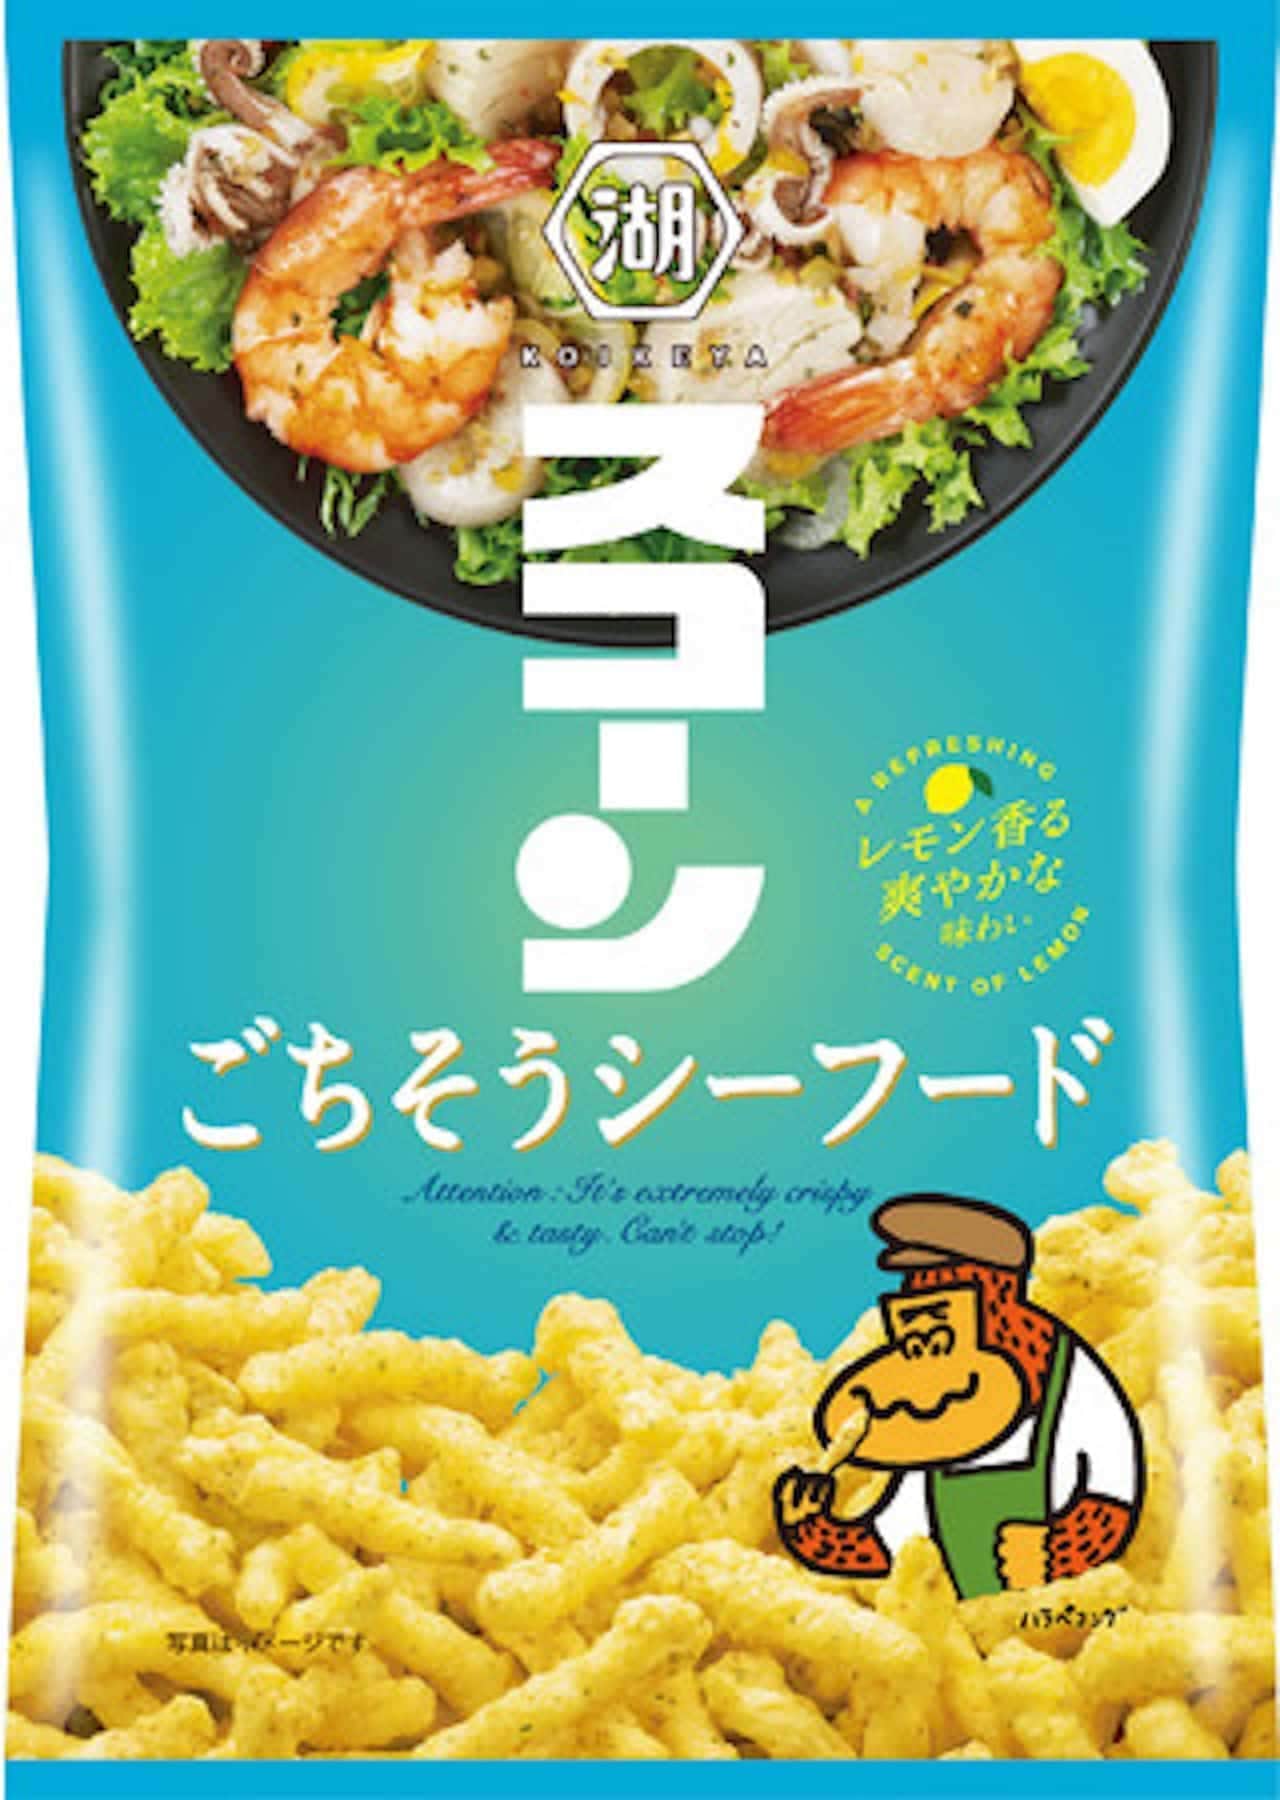 Koike-ya "Scorn Feast Seafood"